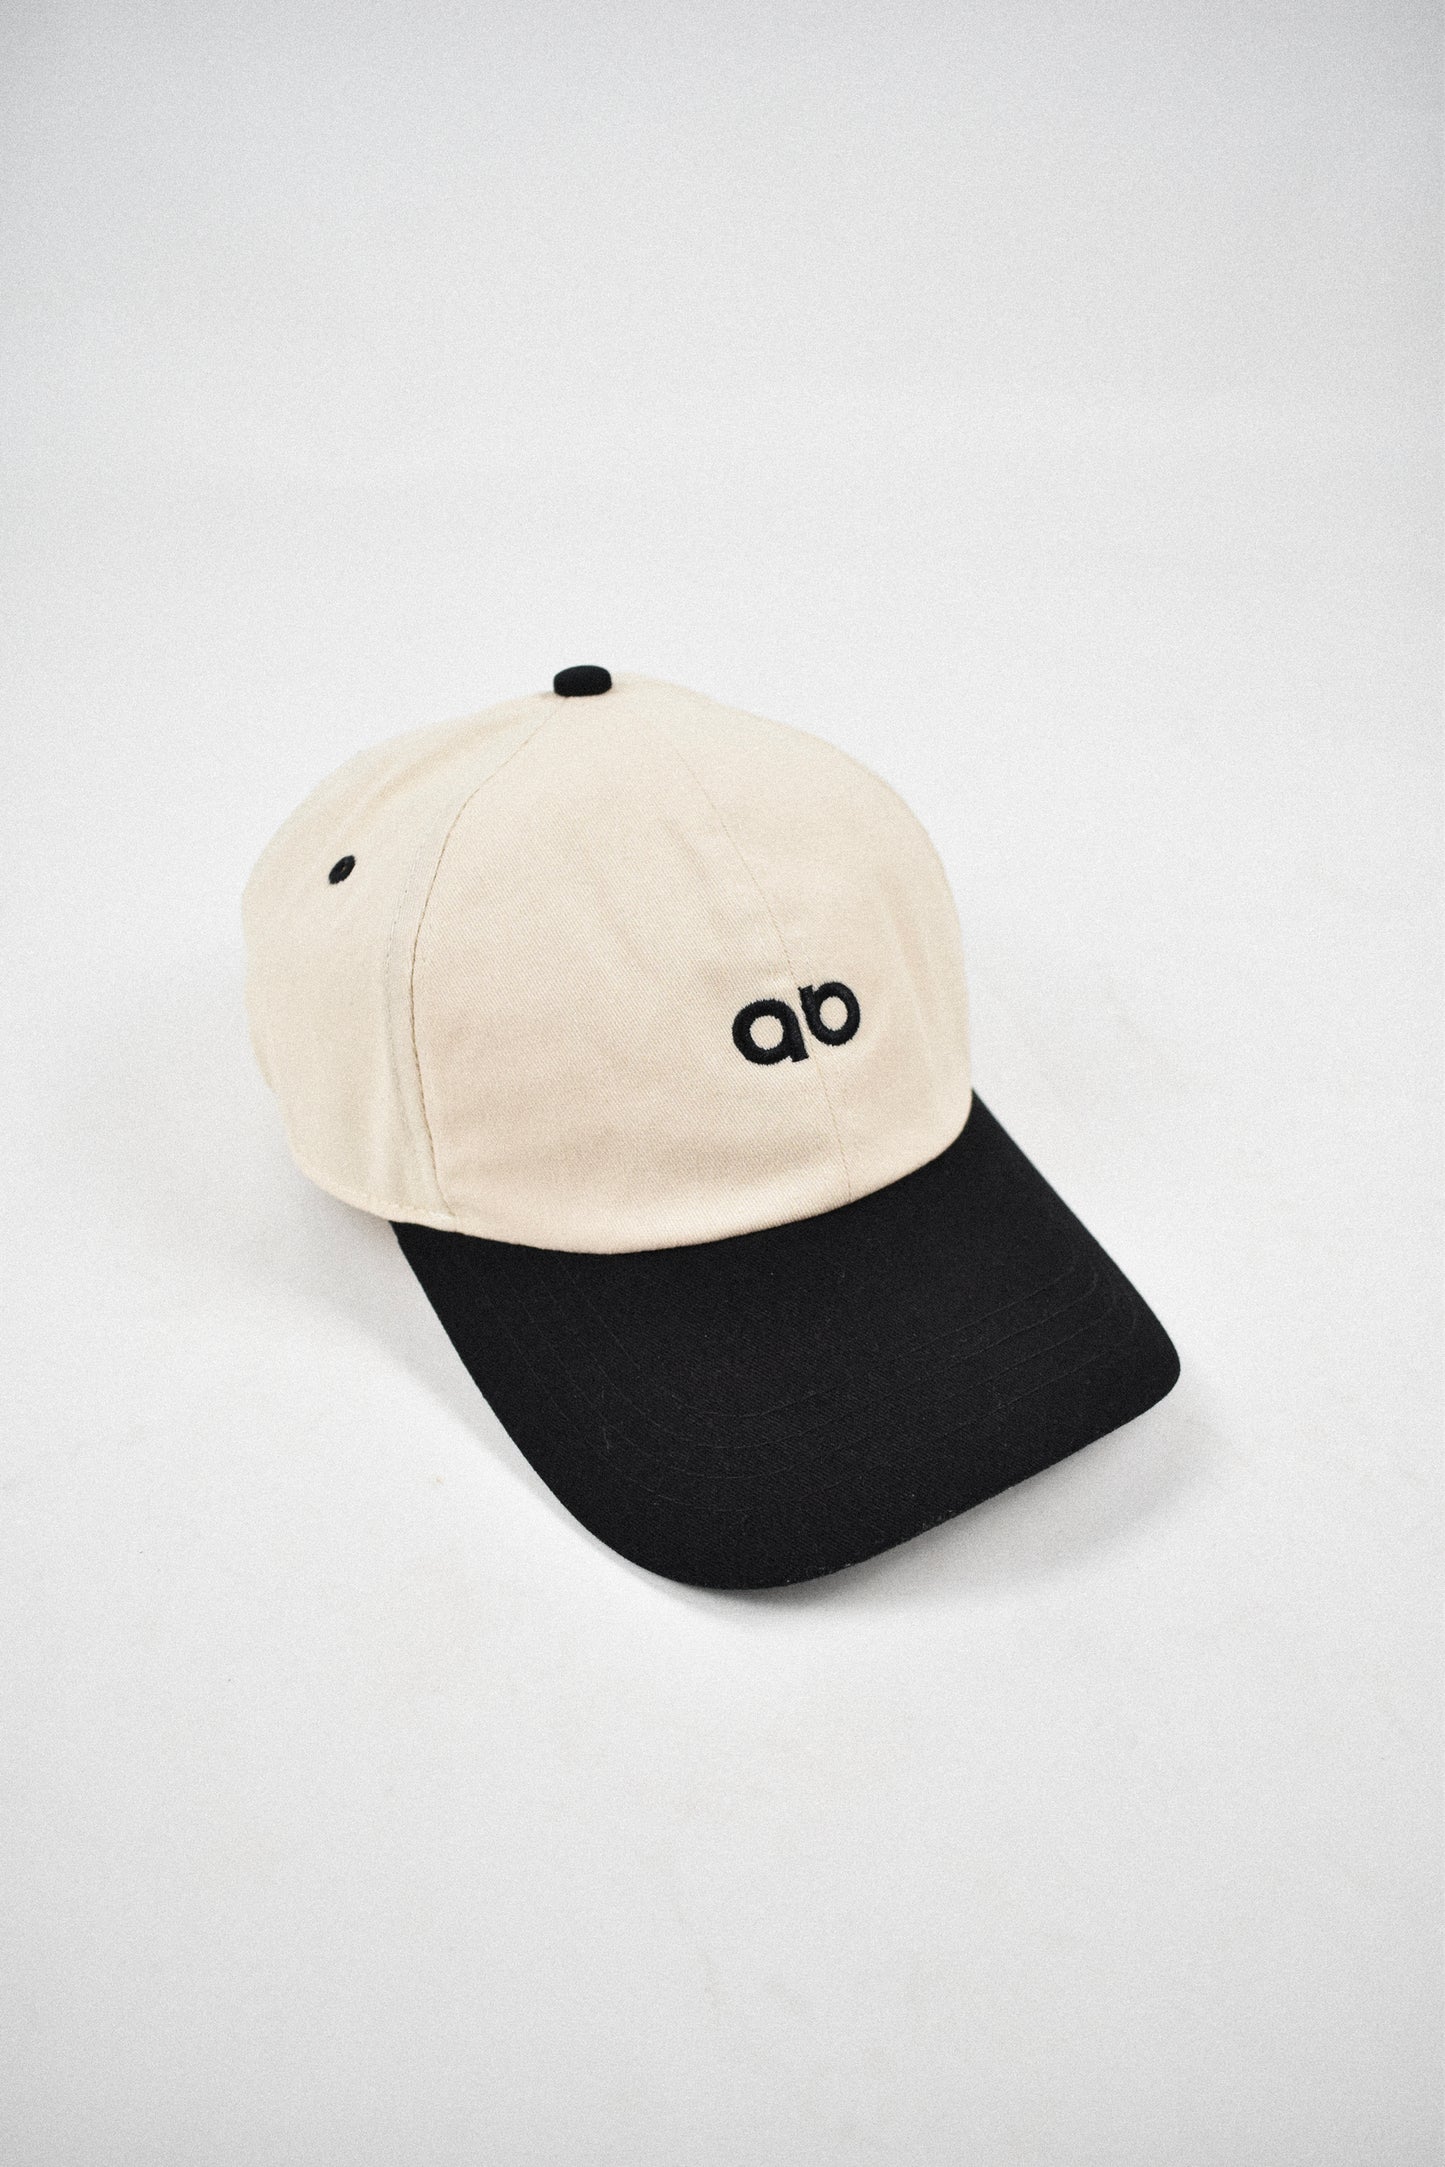 headgear | baseball hat | vintage dry | black